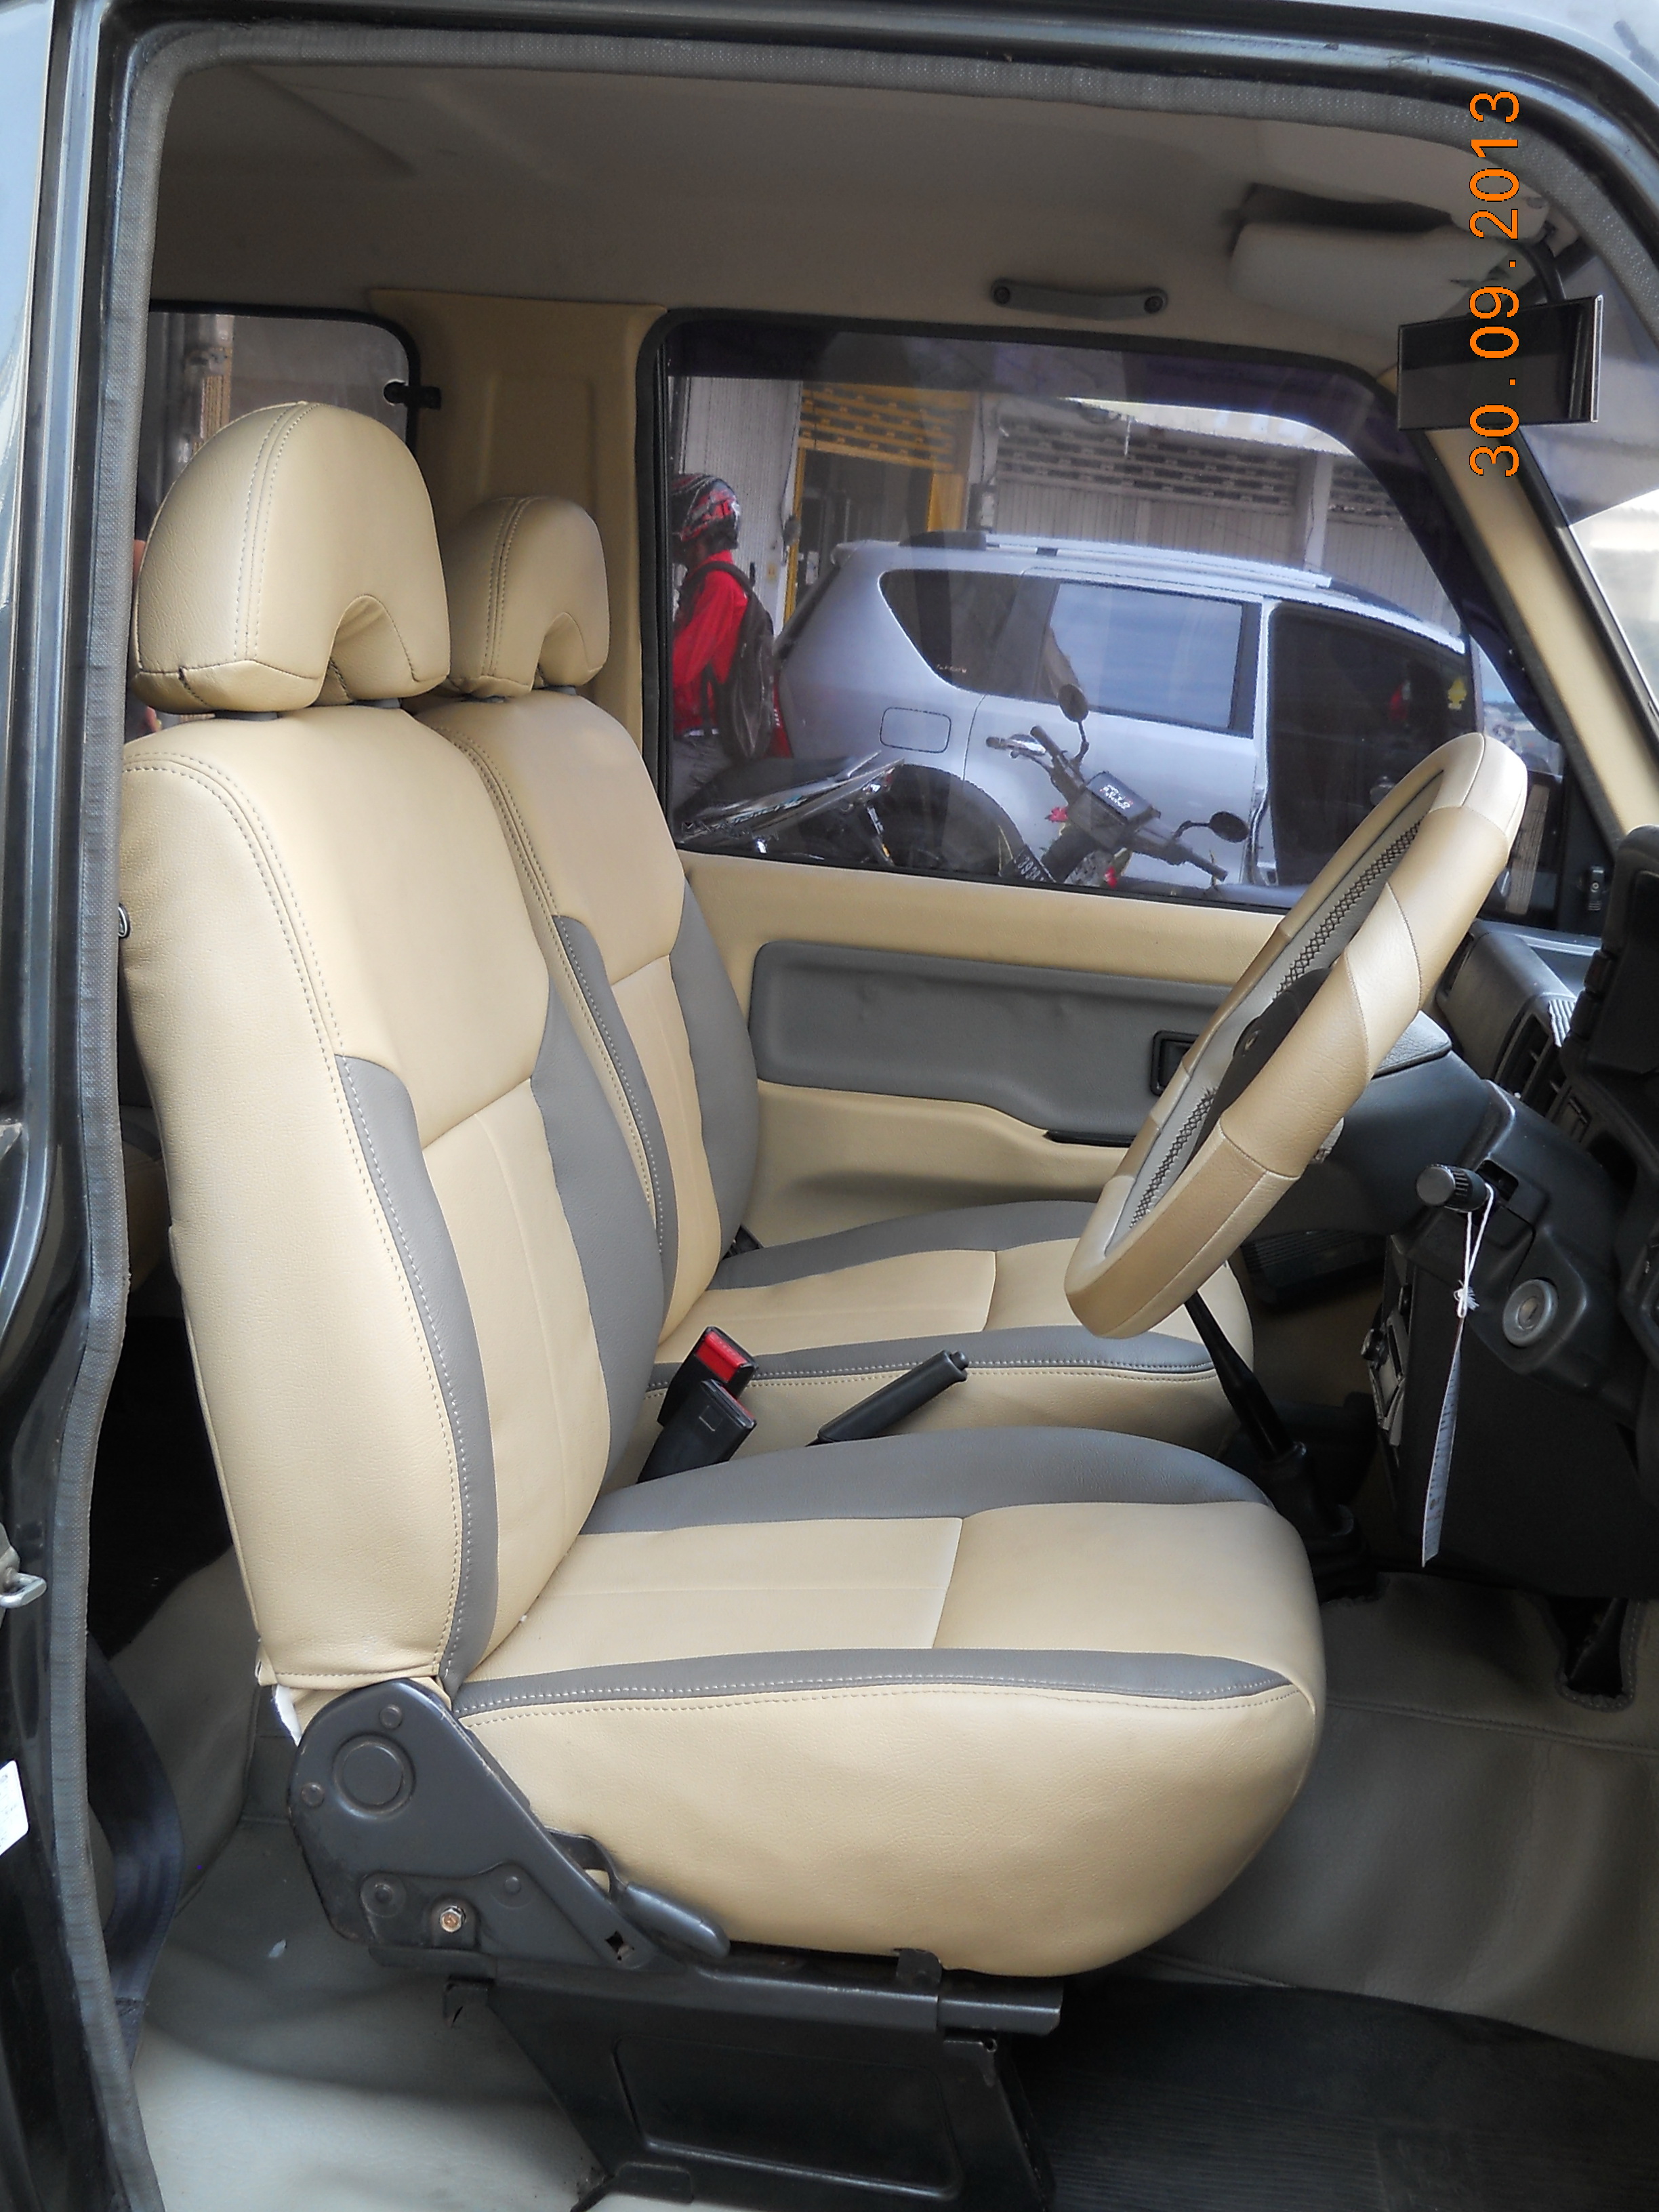 Modif Interior Mobil Lama Specialist Jok Mobil Surabaya